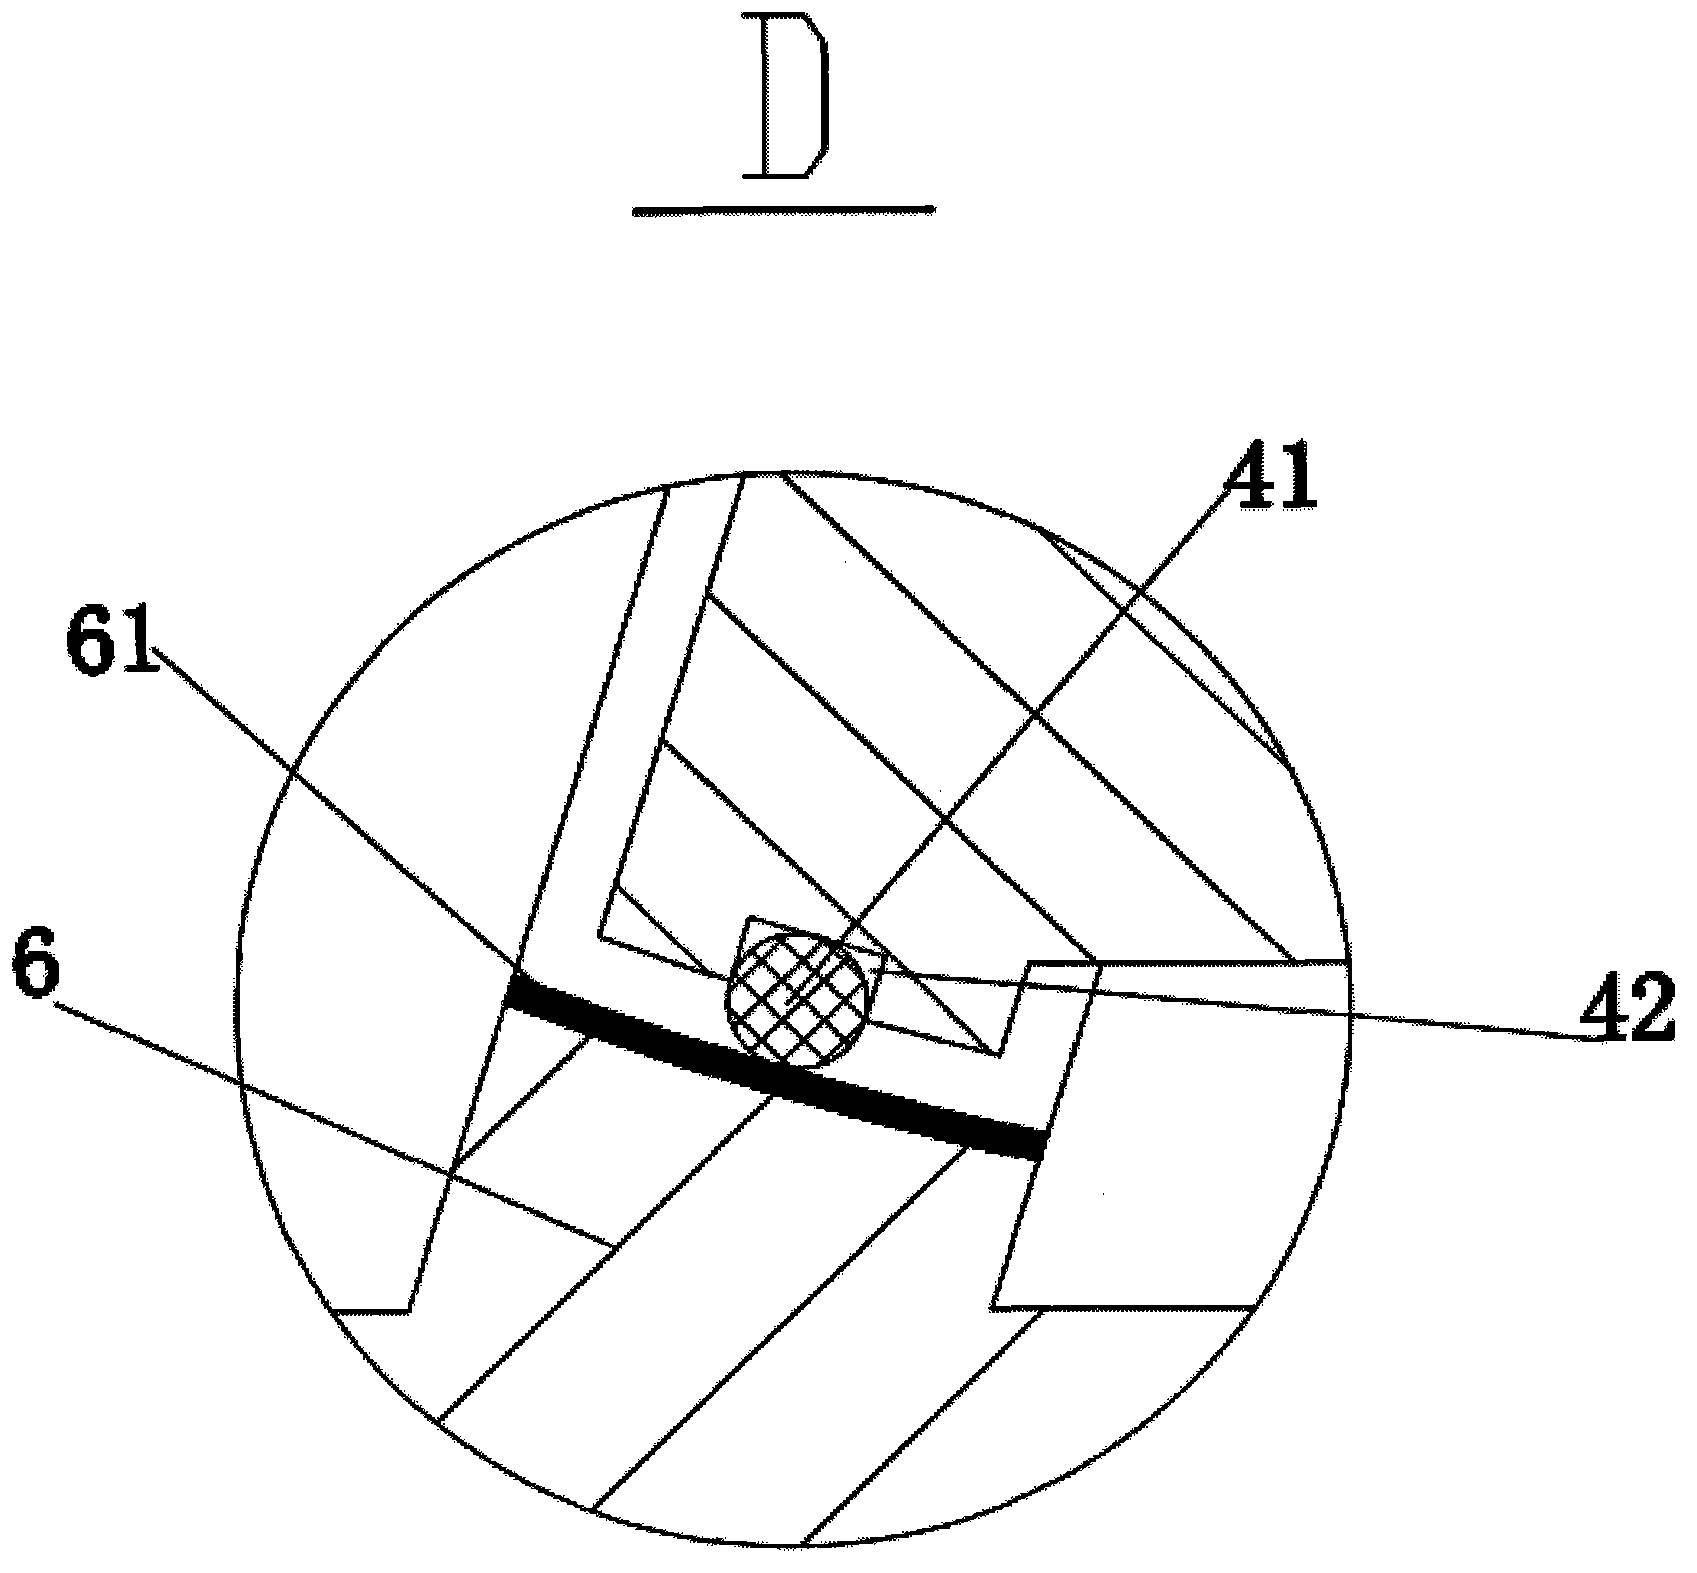 Bidirectional sealing butterfly valve